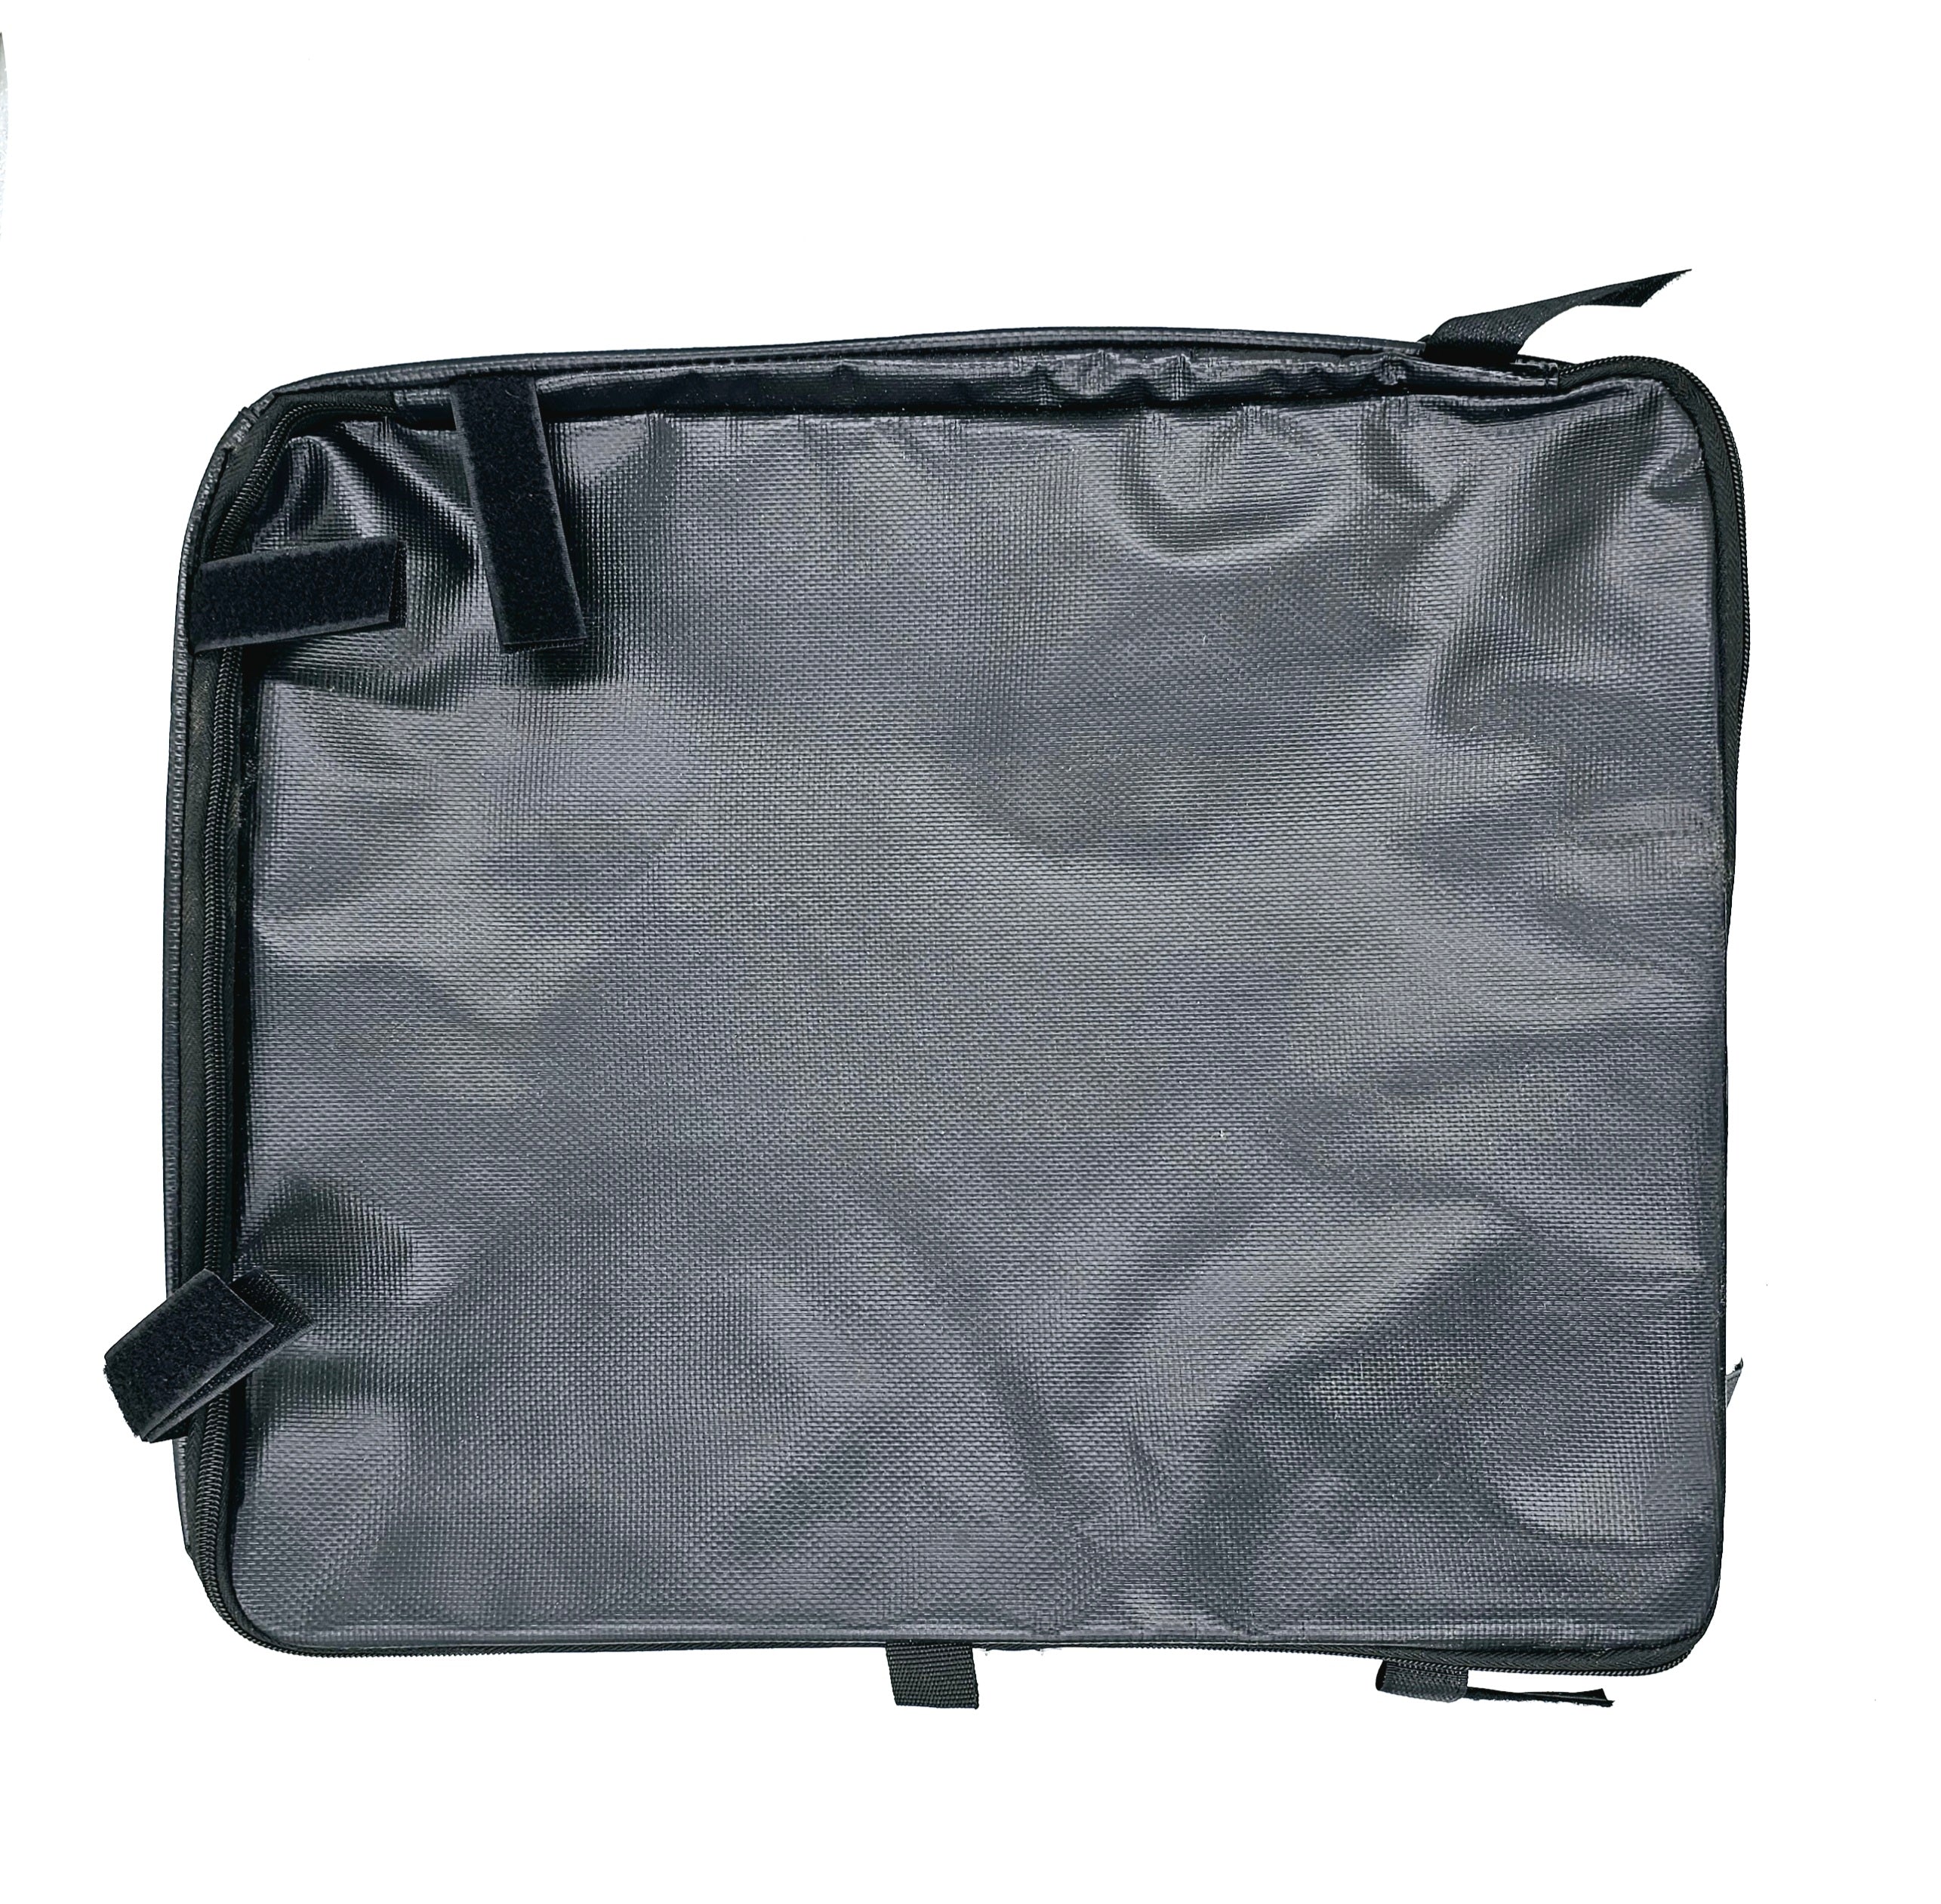 Tri-Cycle Rear Bag